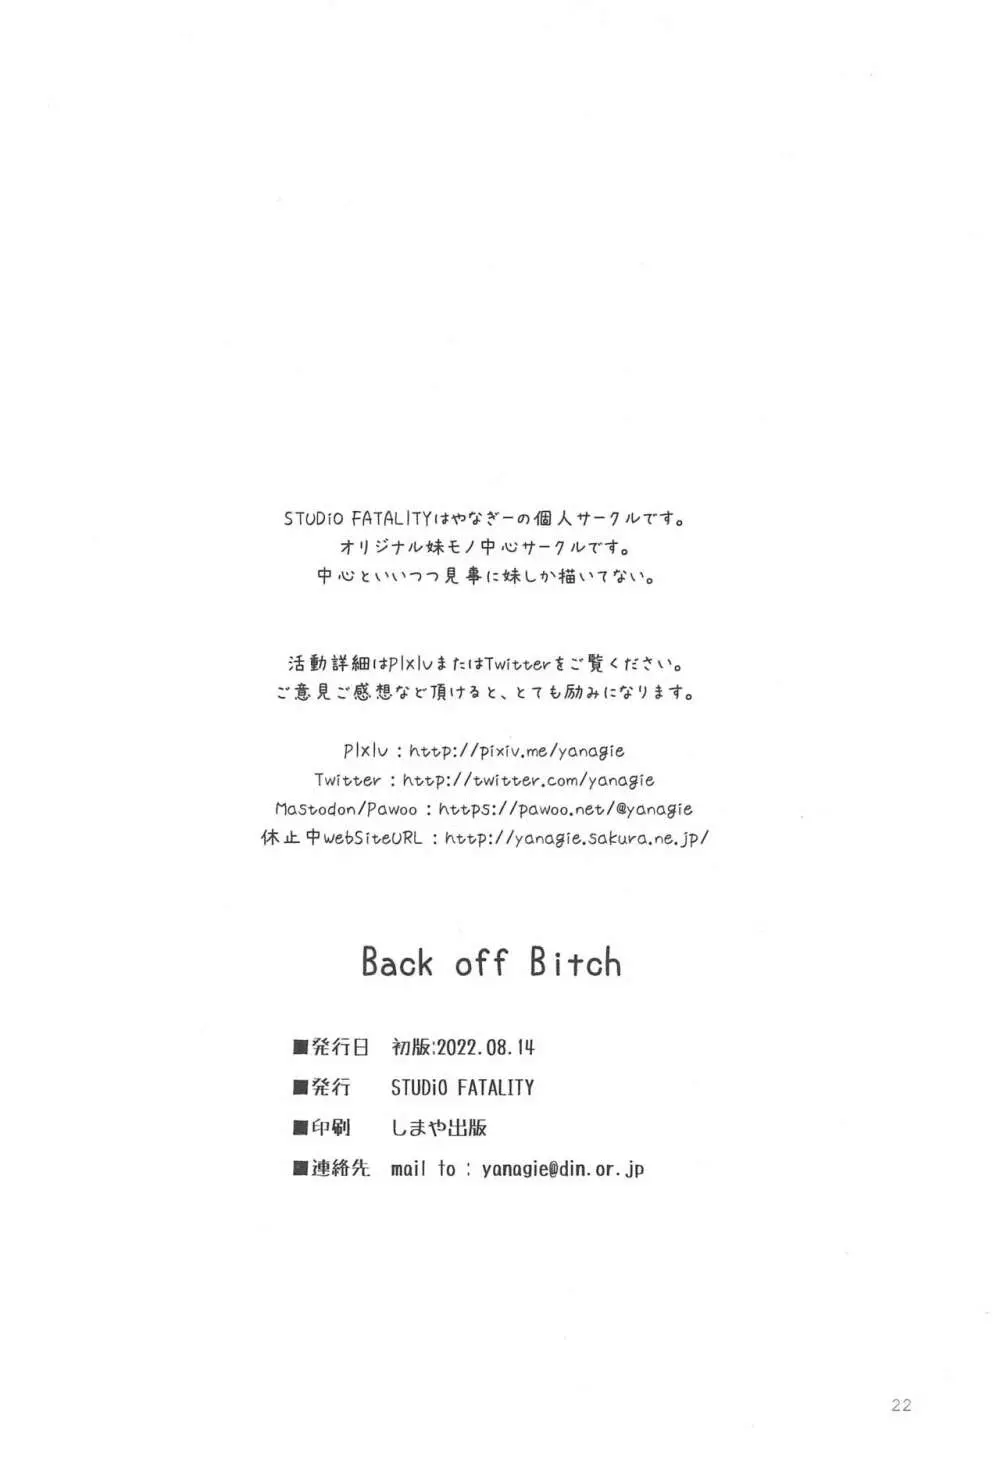 Back off Bitch 22ページ